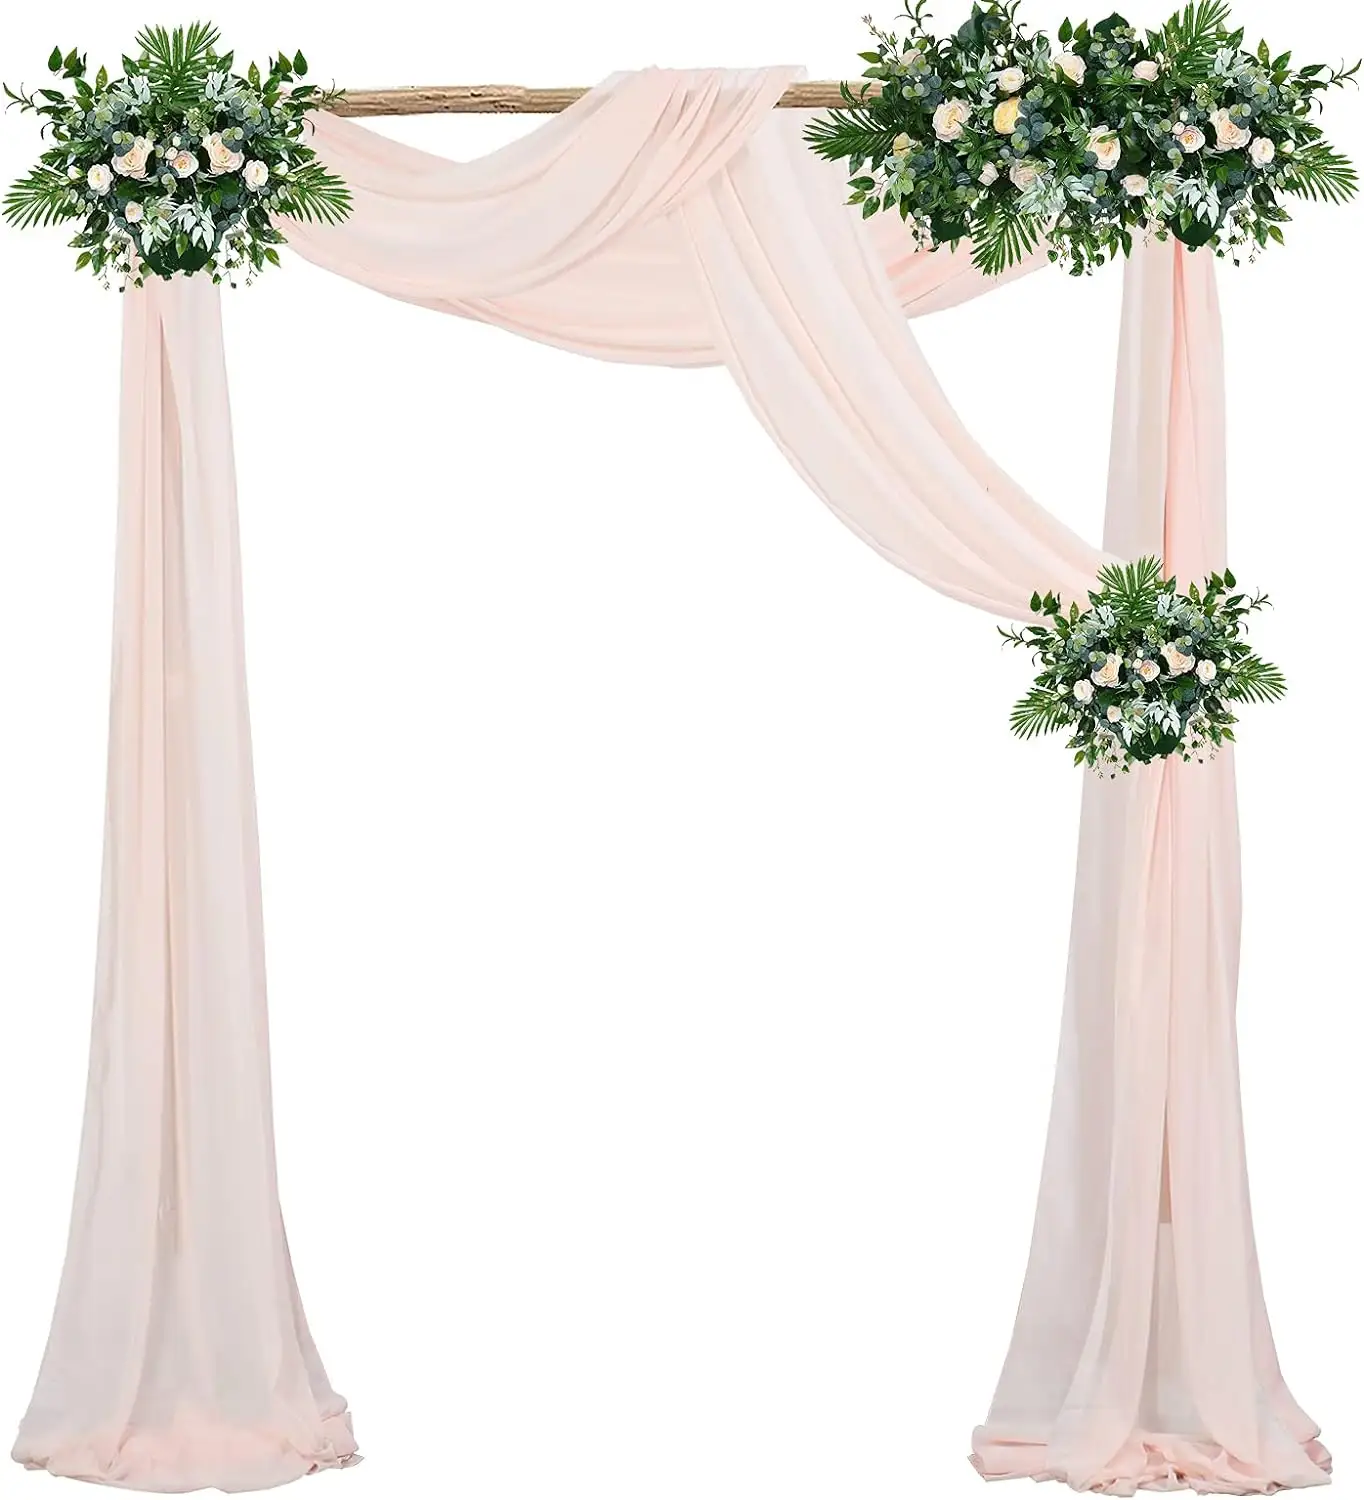 Draping Ceiling Drapery Wedding Arch Drapes Wedding Ceremony Reception Decoration